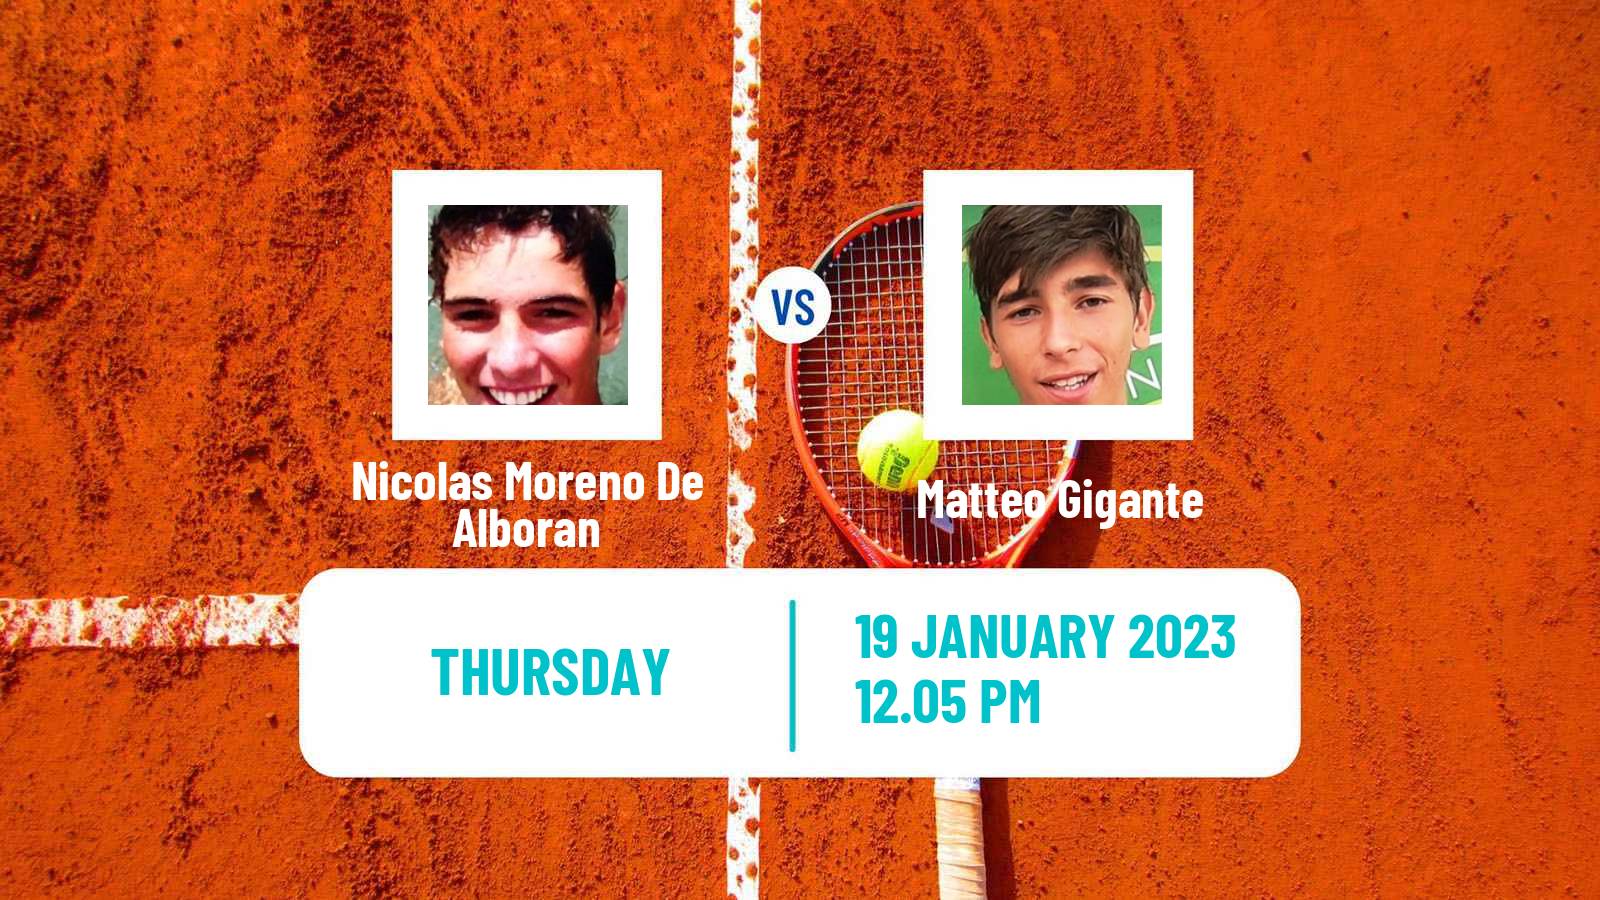 Tennis ATP Challenger Nicolas Moreno De Alboran - Matteo Gigante